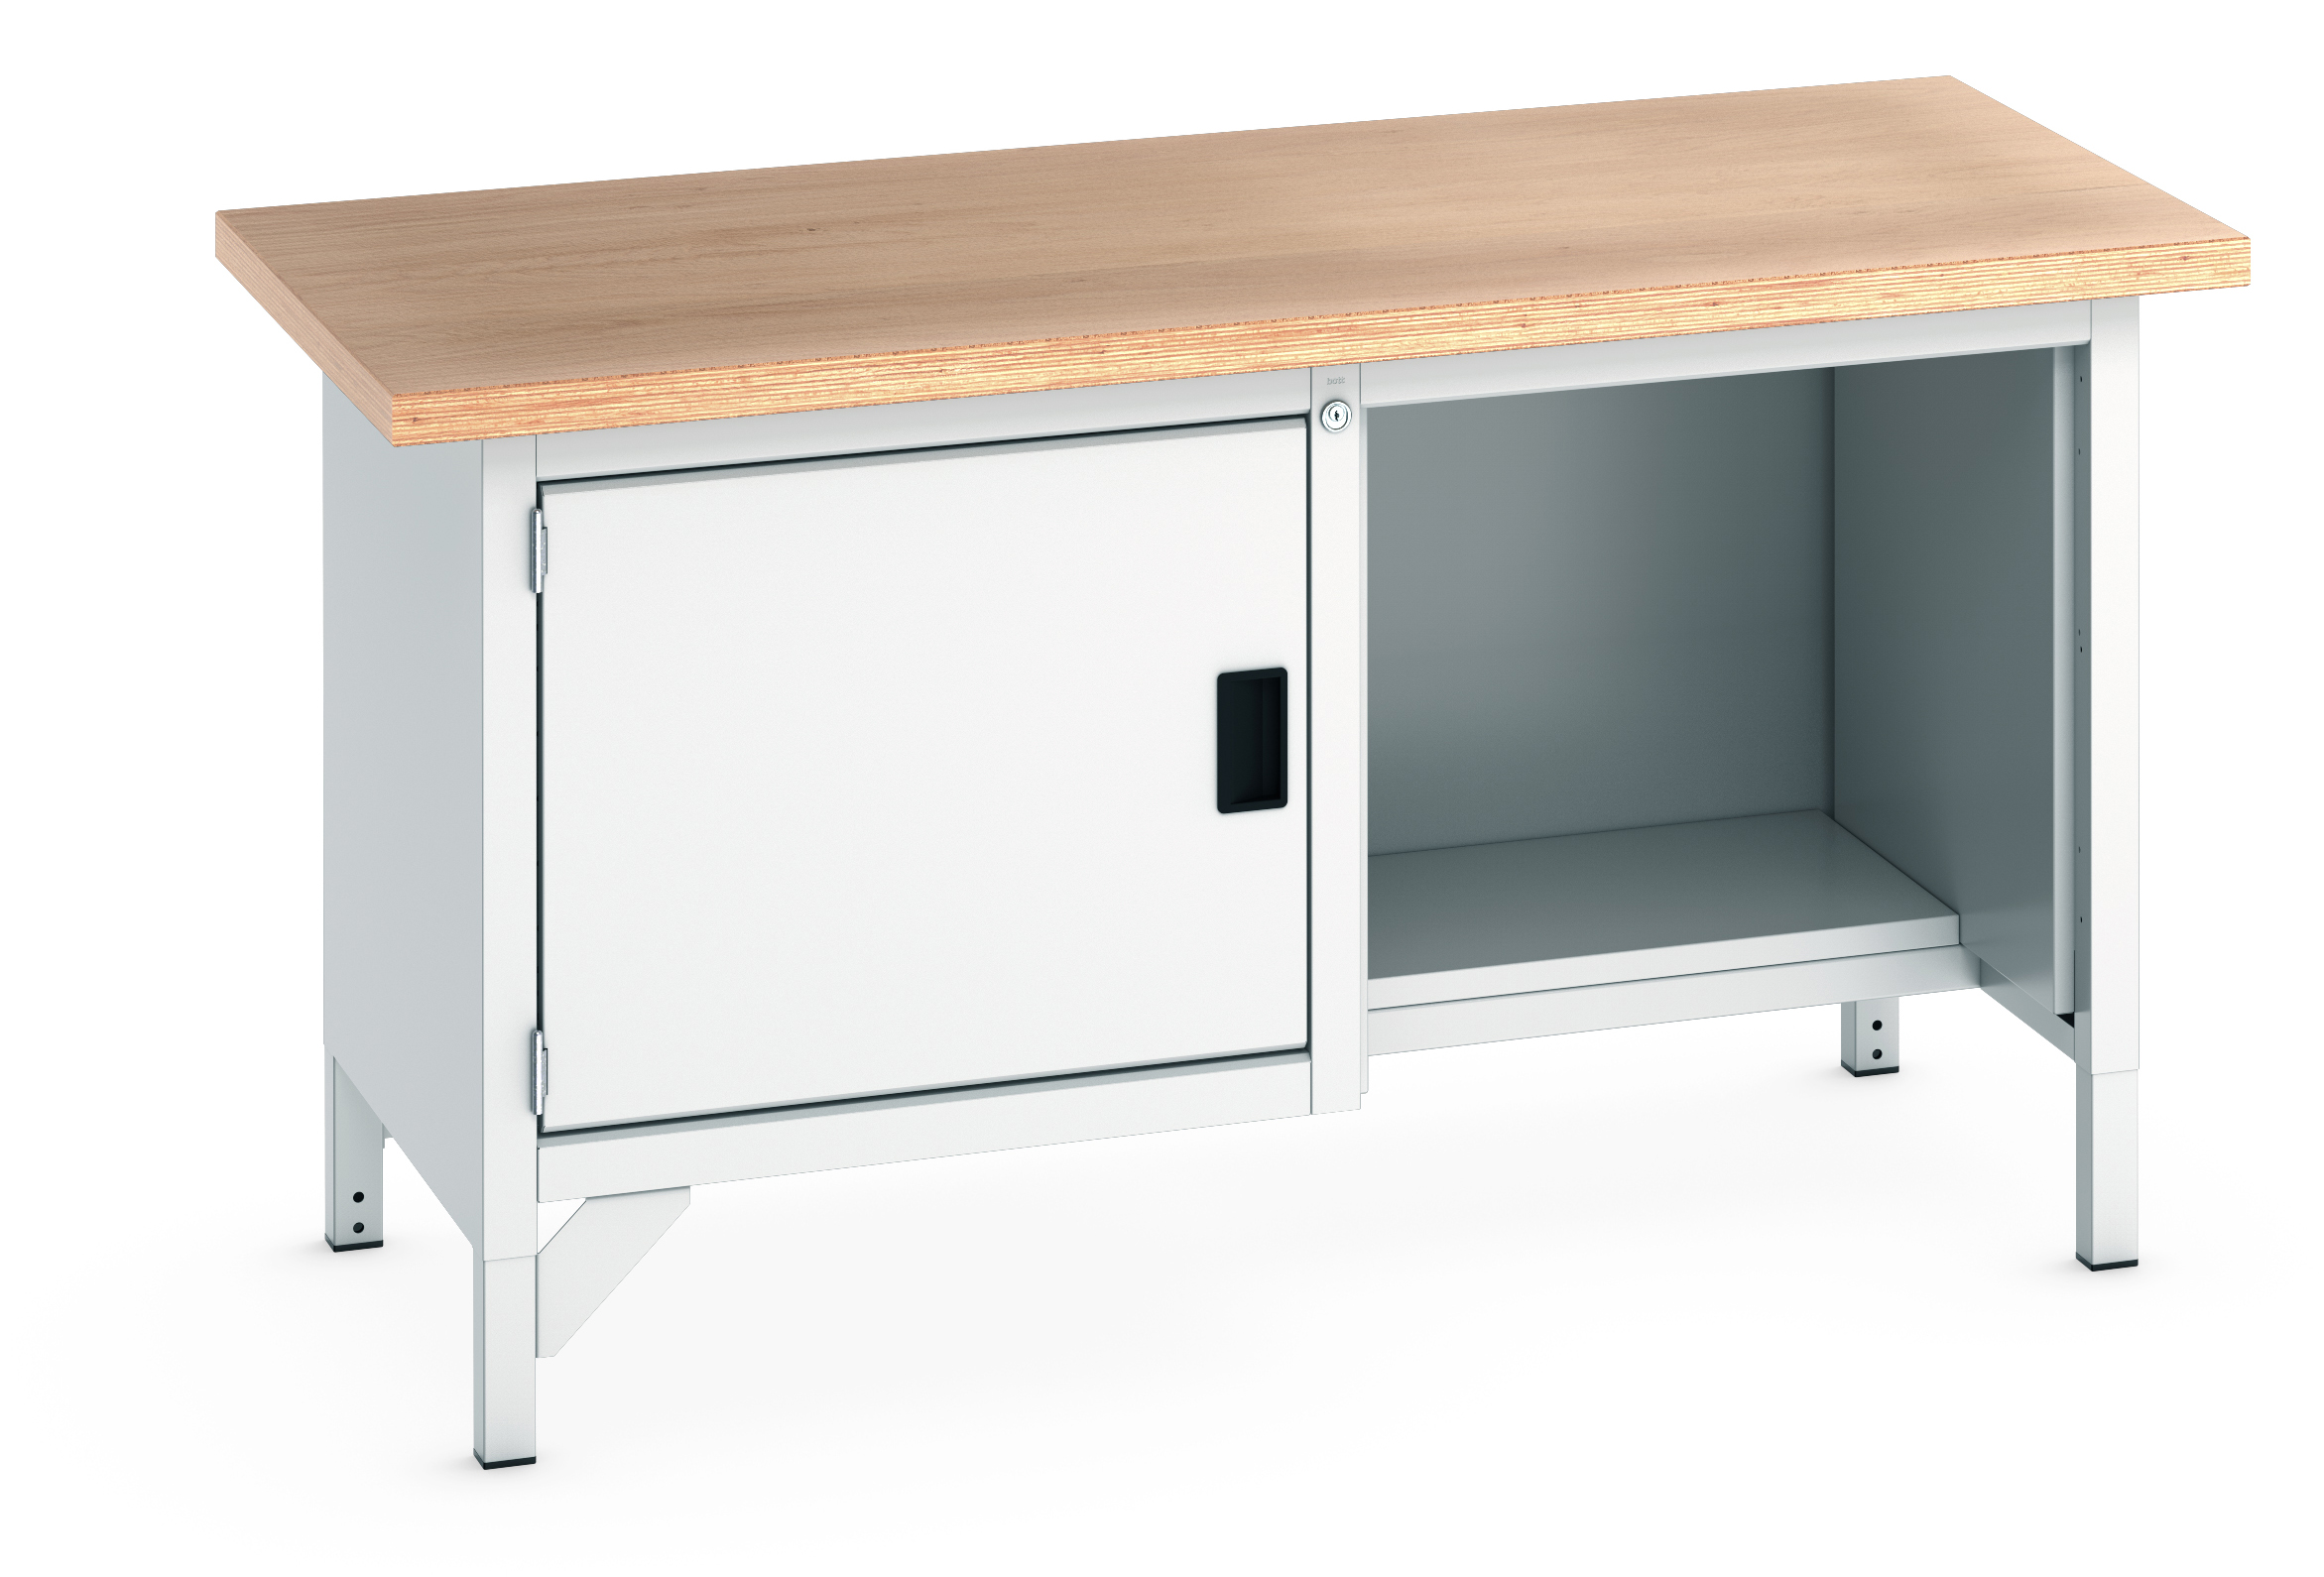 Bott Cubio Storage Bench With Full Cupboard / Open With Half Depth Base Shelf - 41002034.16V